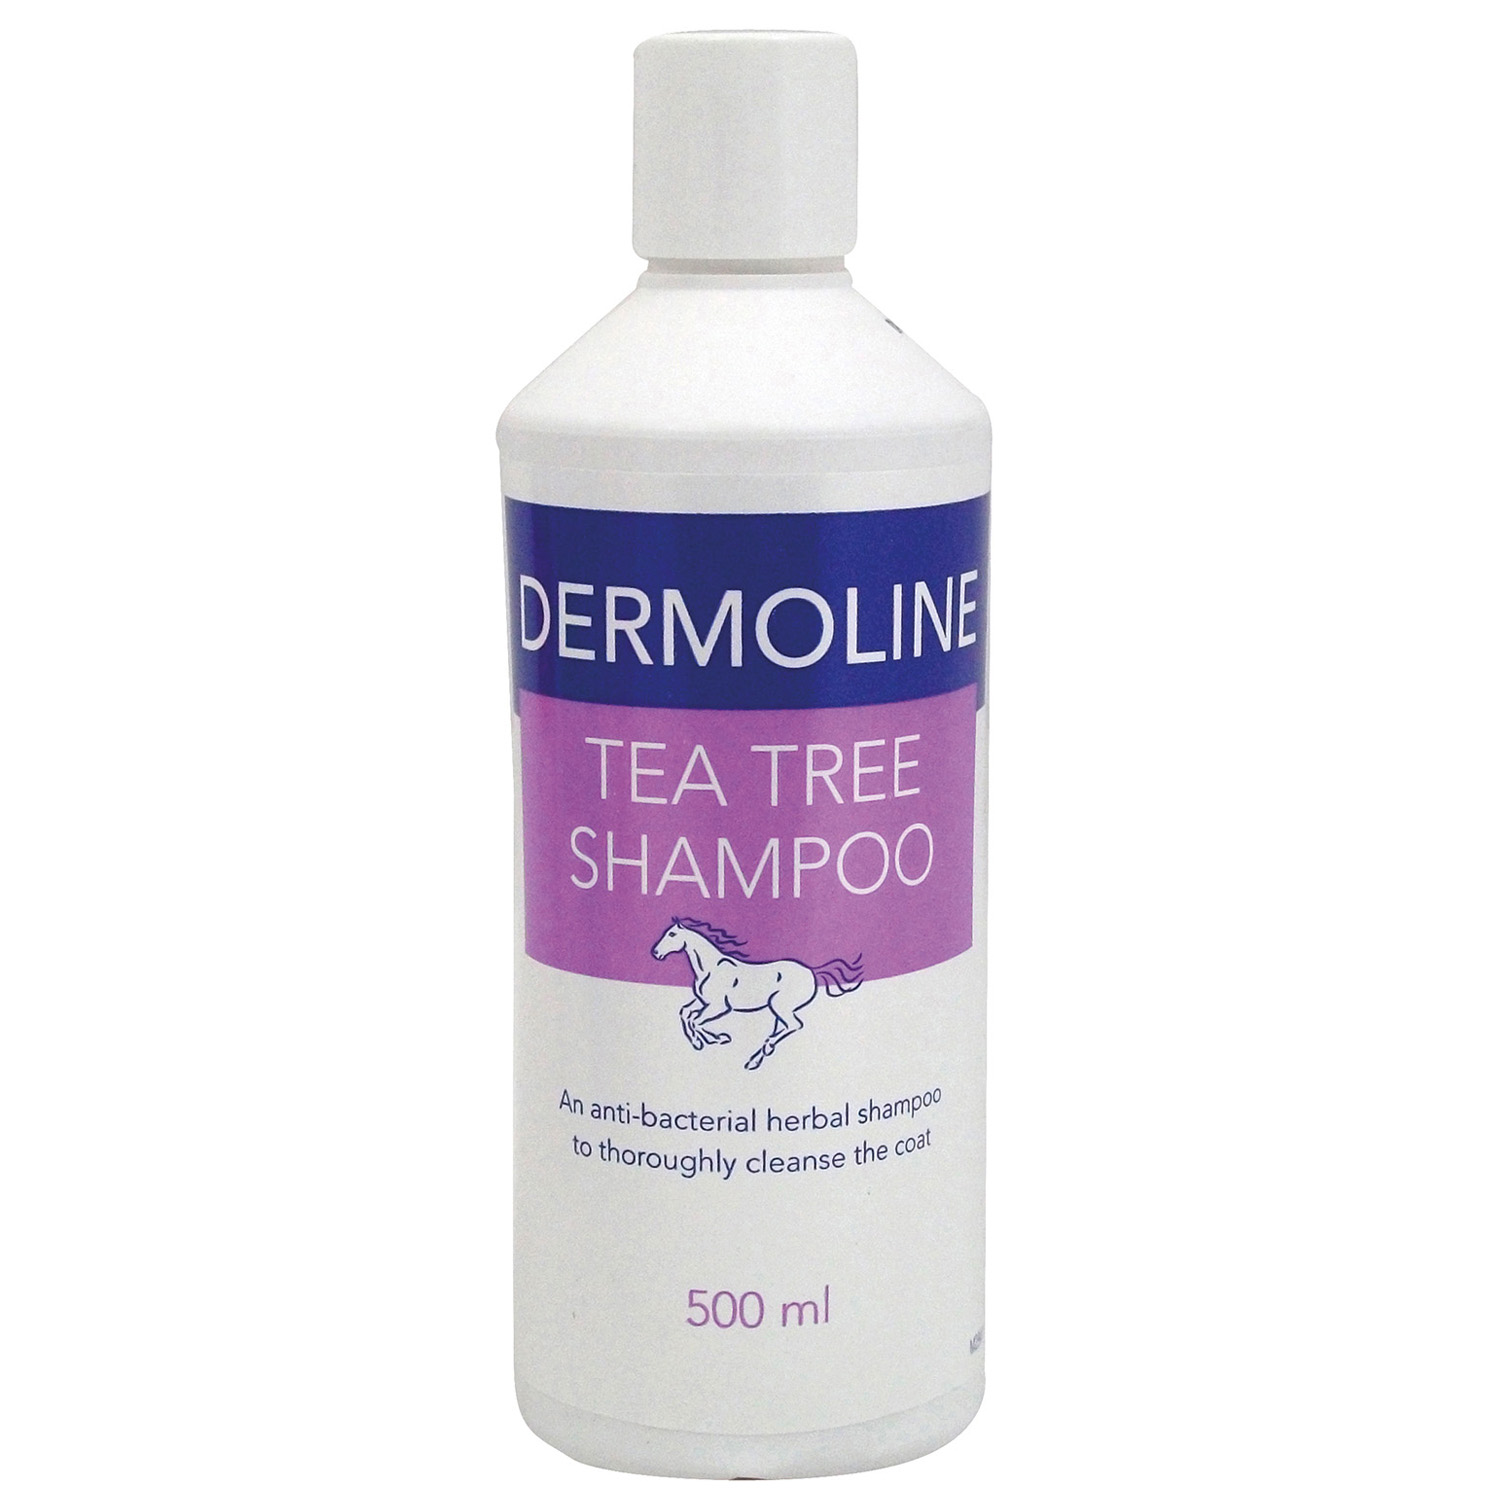 DERMOLINE TEA TREE SHAMPOO DERMOLINE TEA TREE SHAMPOO 500 ML  500 ML